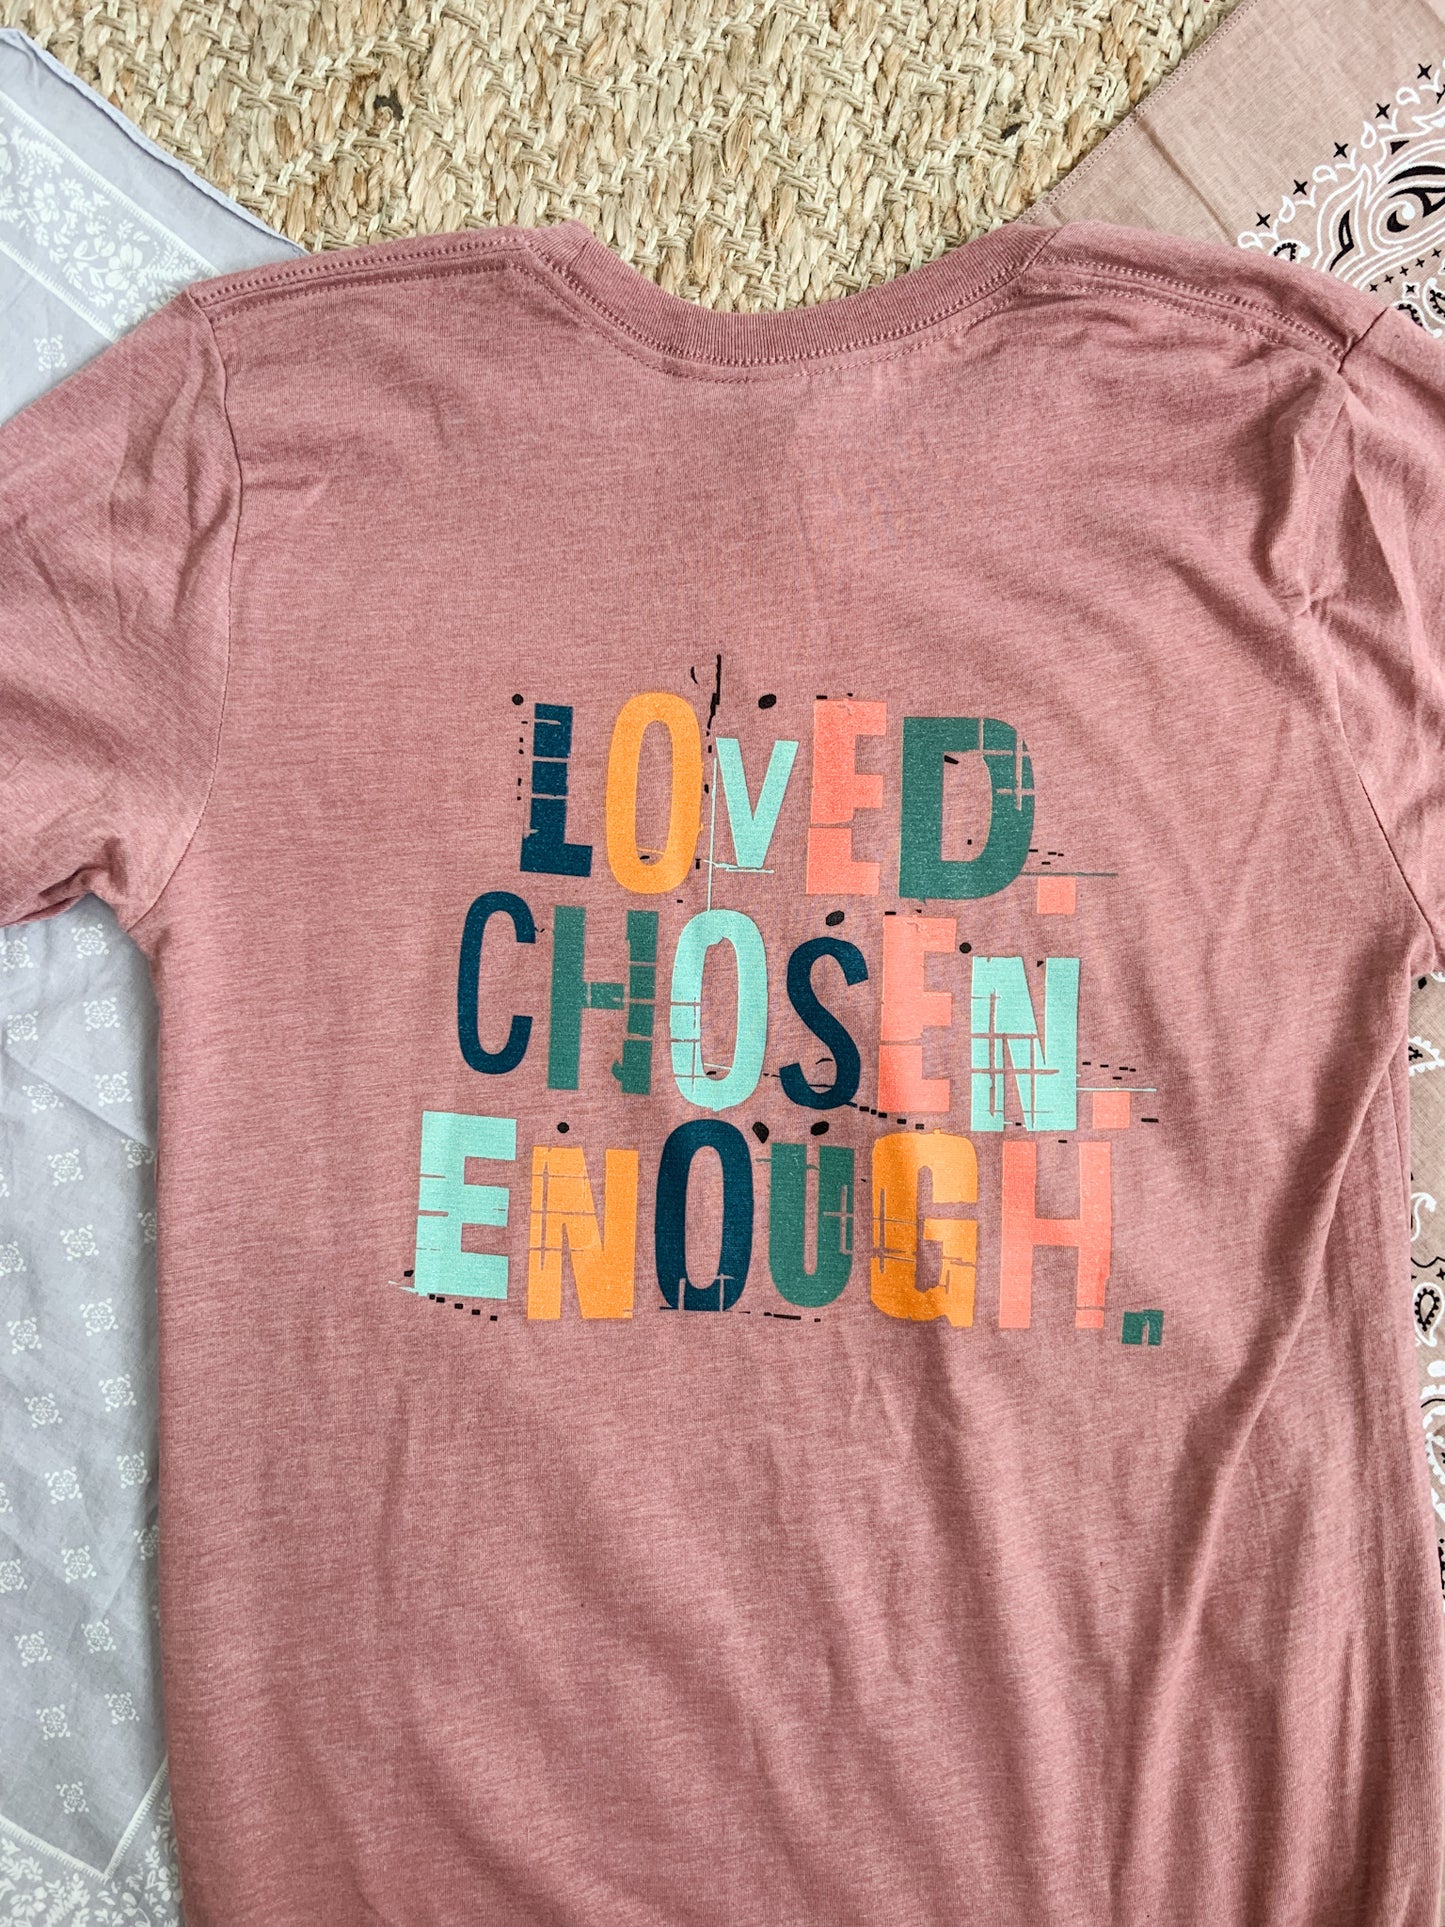 Loved Chosen T-Shirt